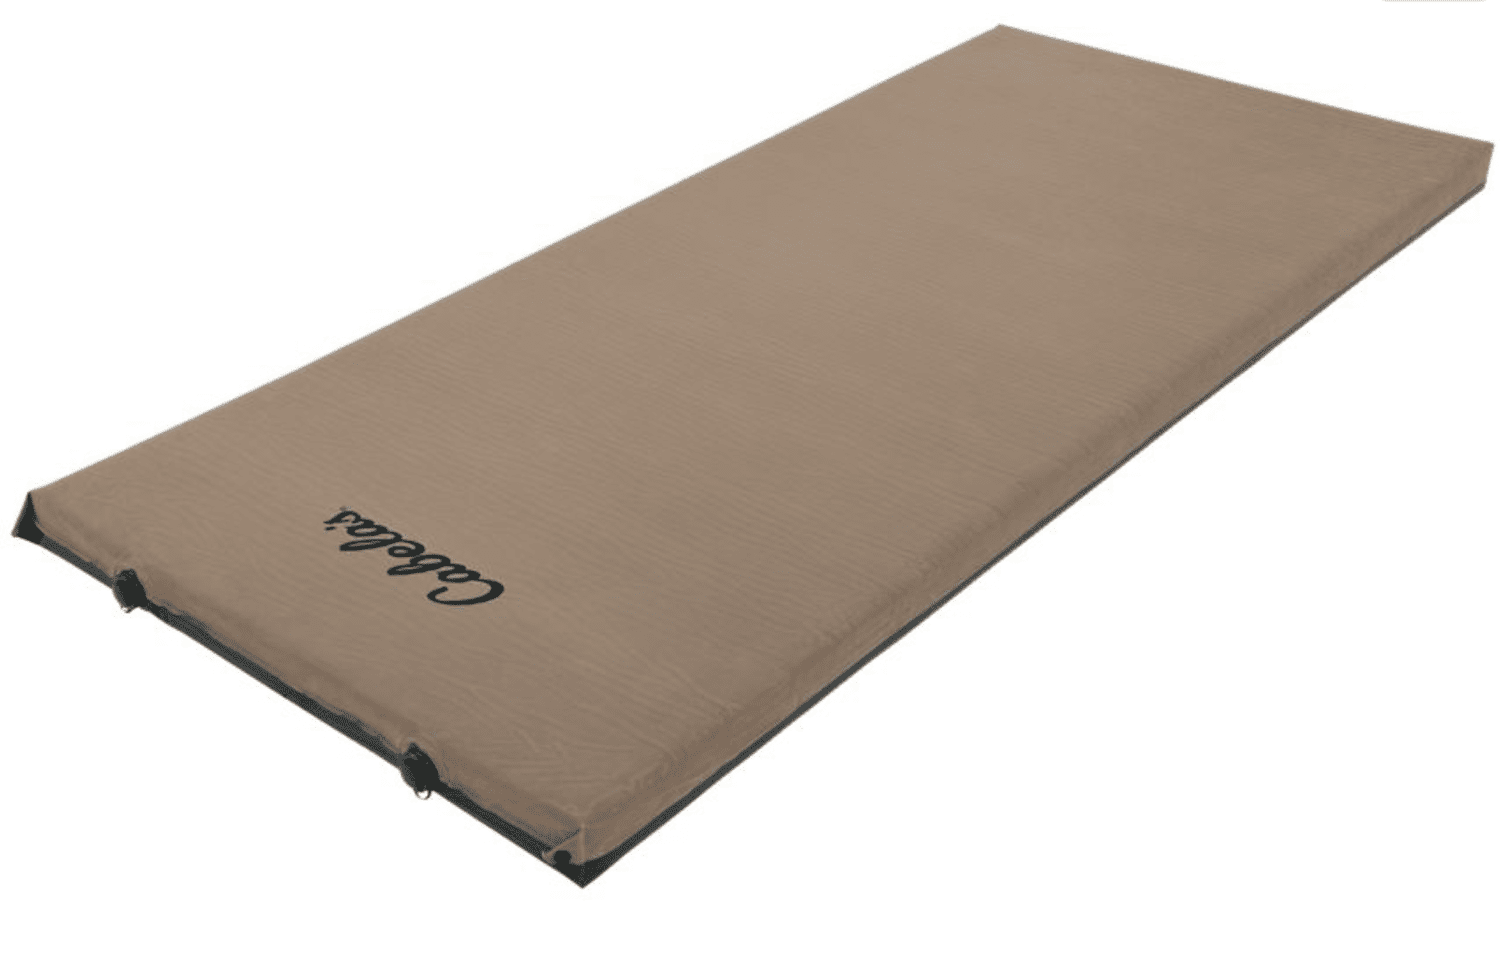 Cabela's sleep mat for camping